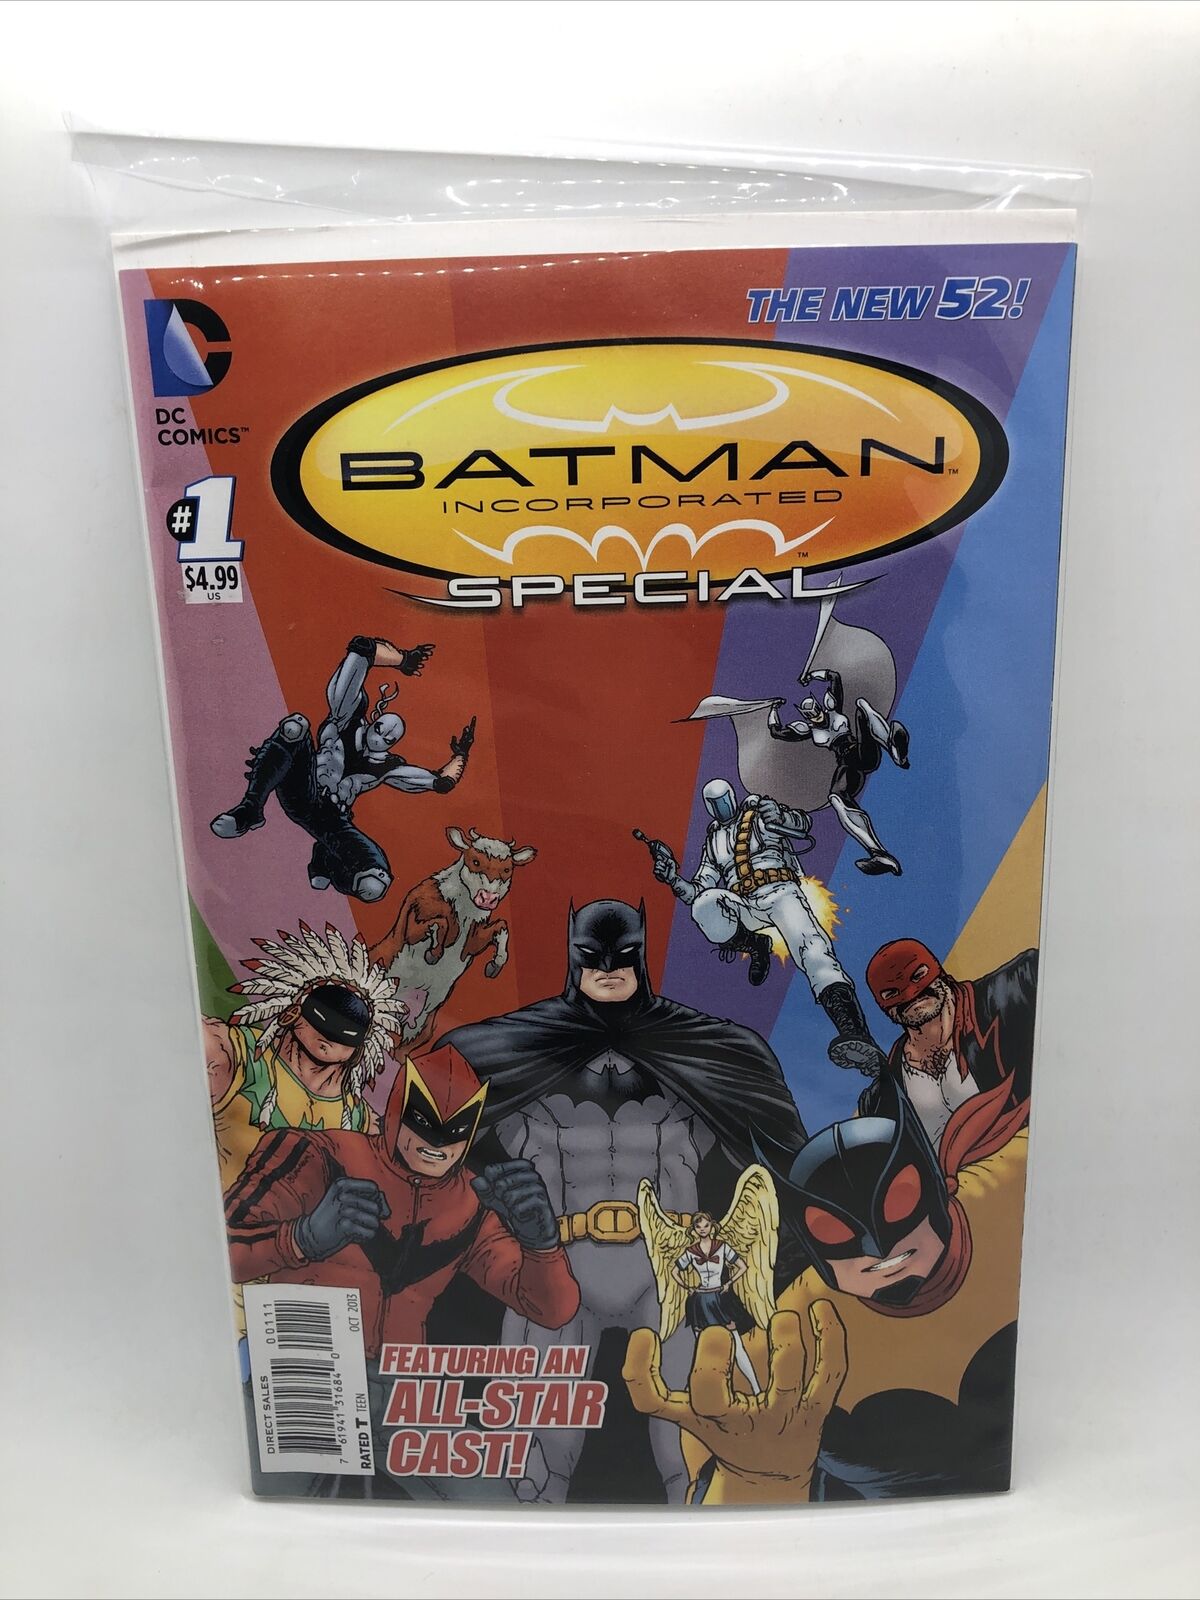 BATMAN INCORPORATED SPECIAL #1 (2013) The New 52 Grant Morrison DC Comics